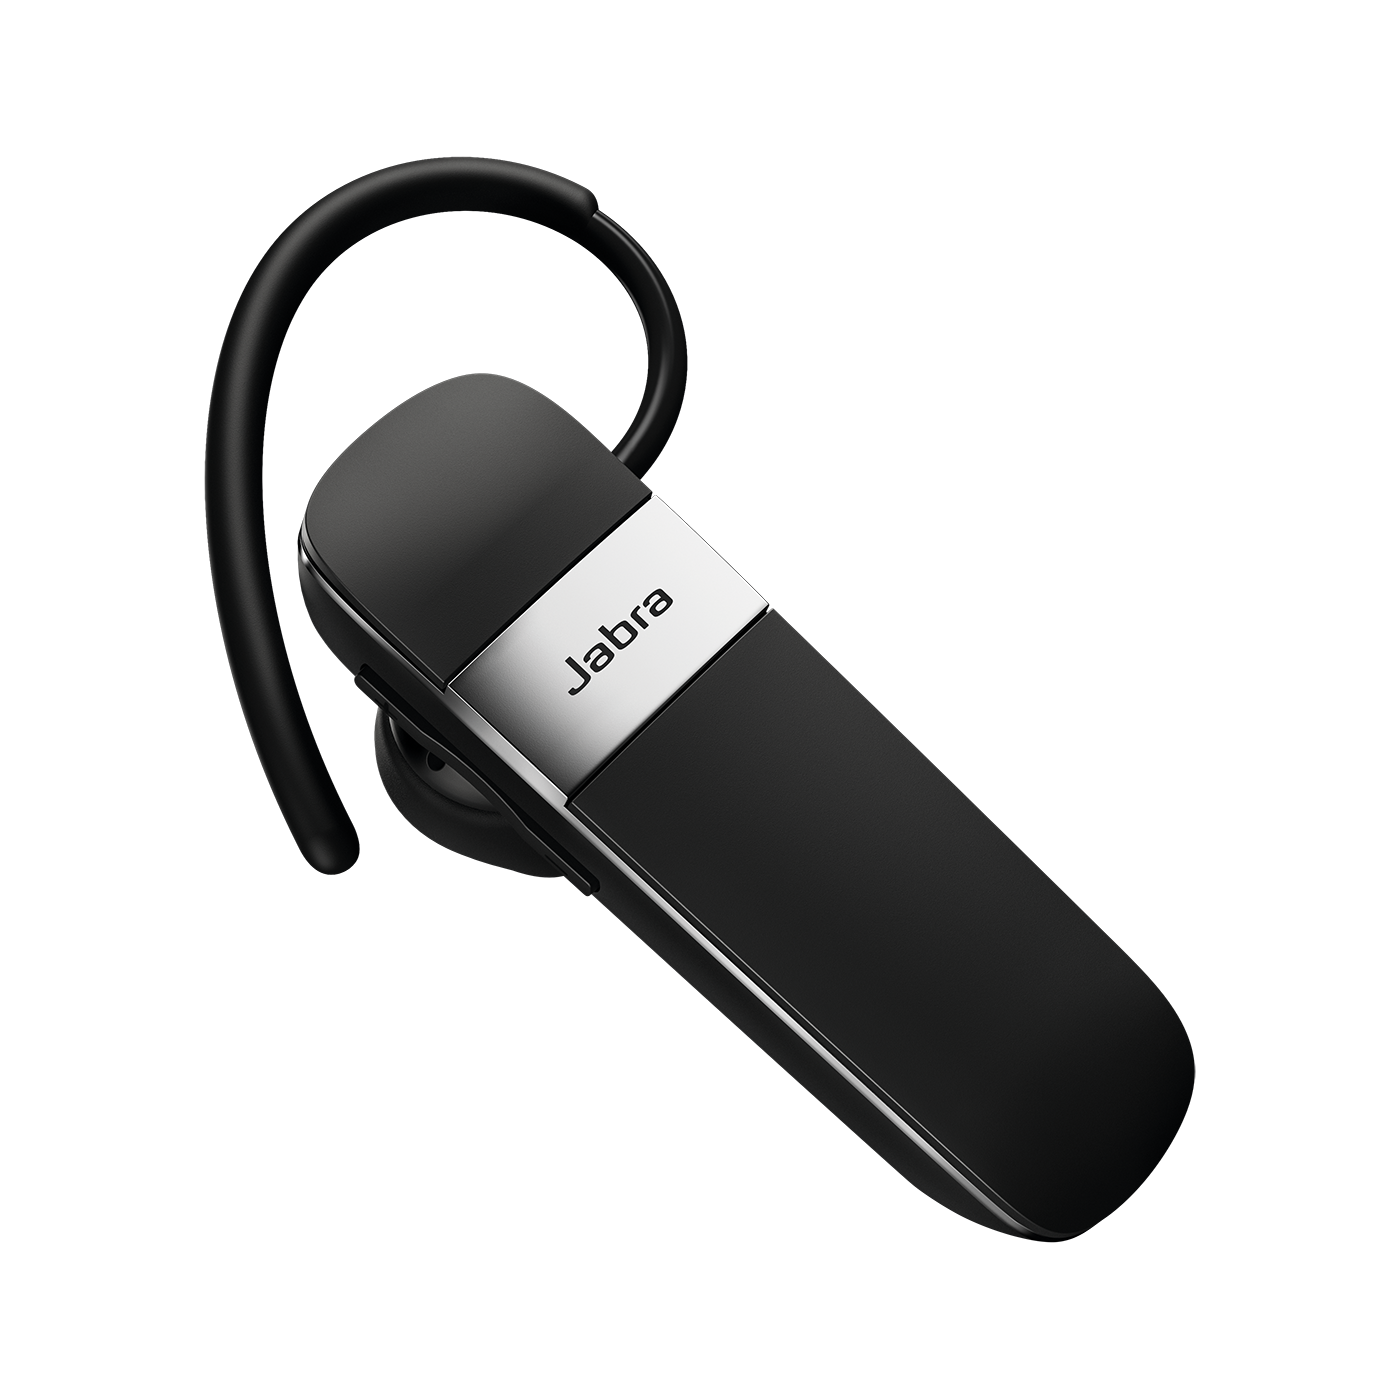 Jabra Talk 15 SE Bluetooth Headset for Calls and Music